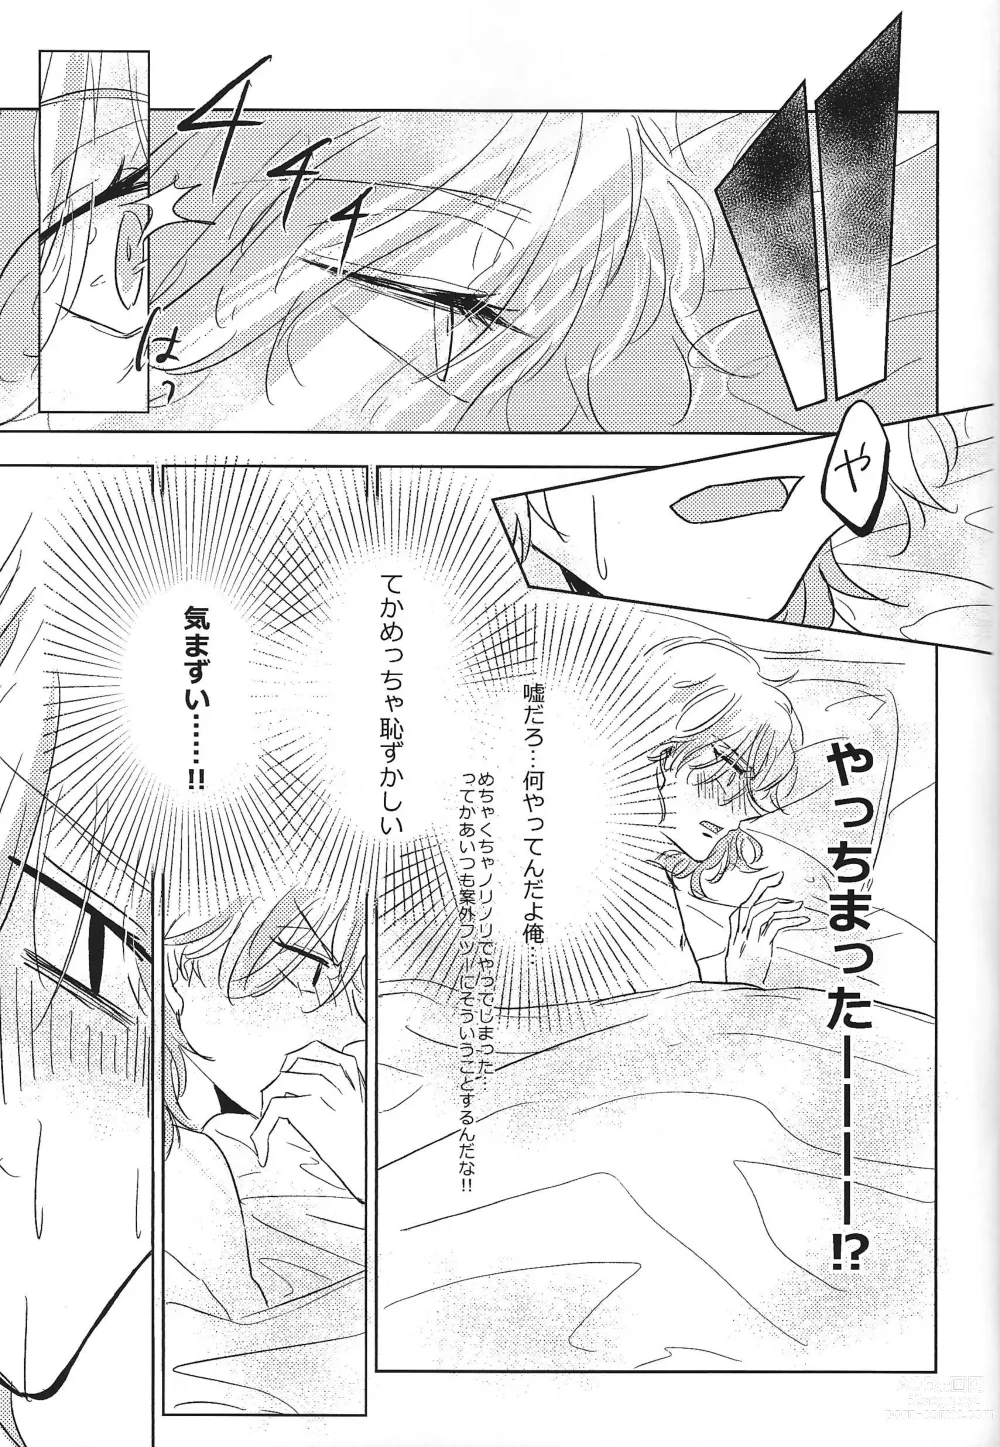 Page 20 of doujinshi Mikanseina